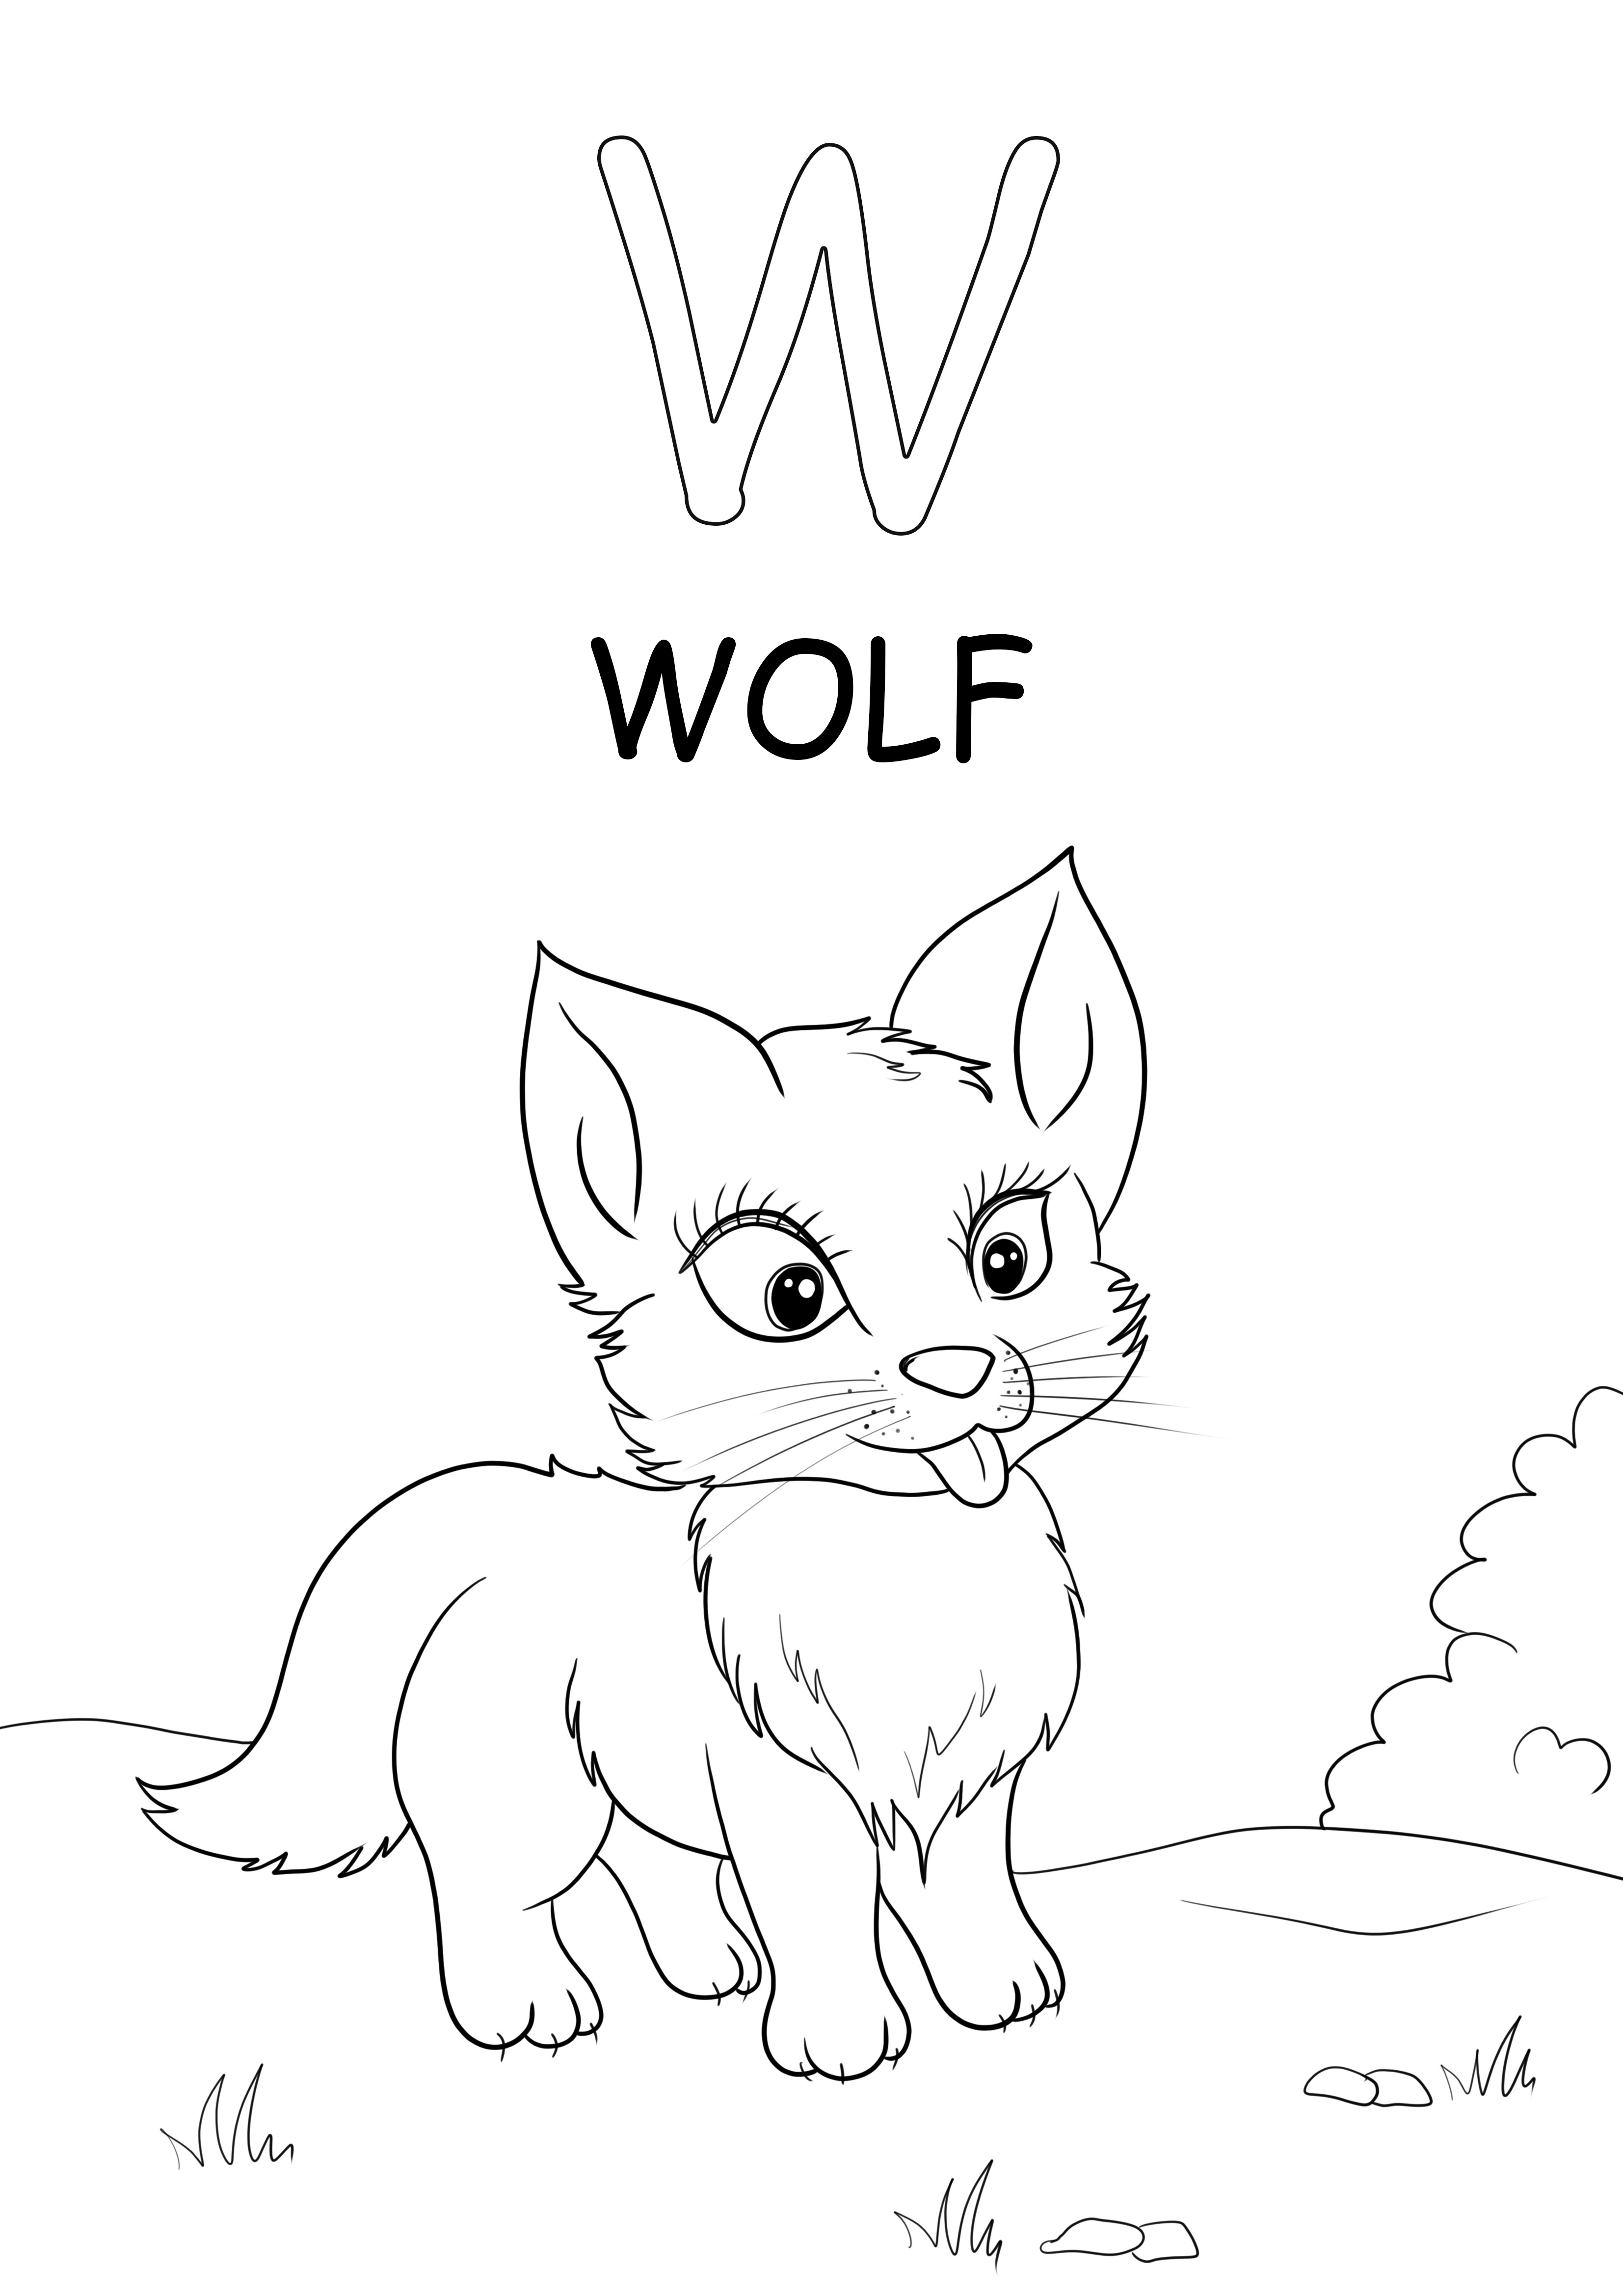 Serigala kata huruf besar dimulai dengan huruf W gratis untuk mewarnai dan mencetak halaman